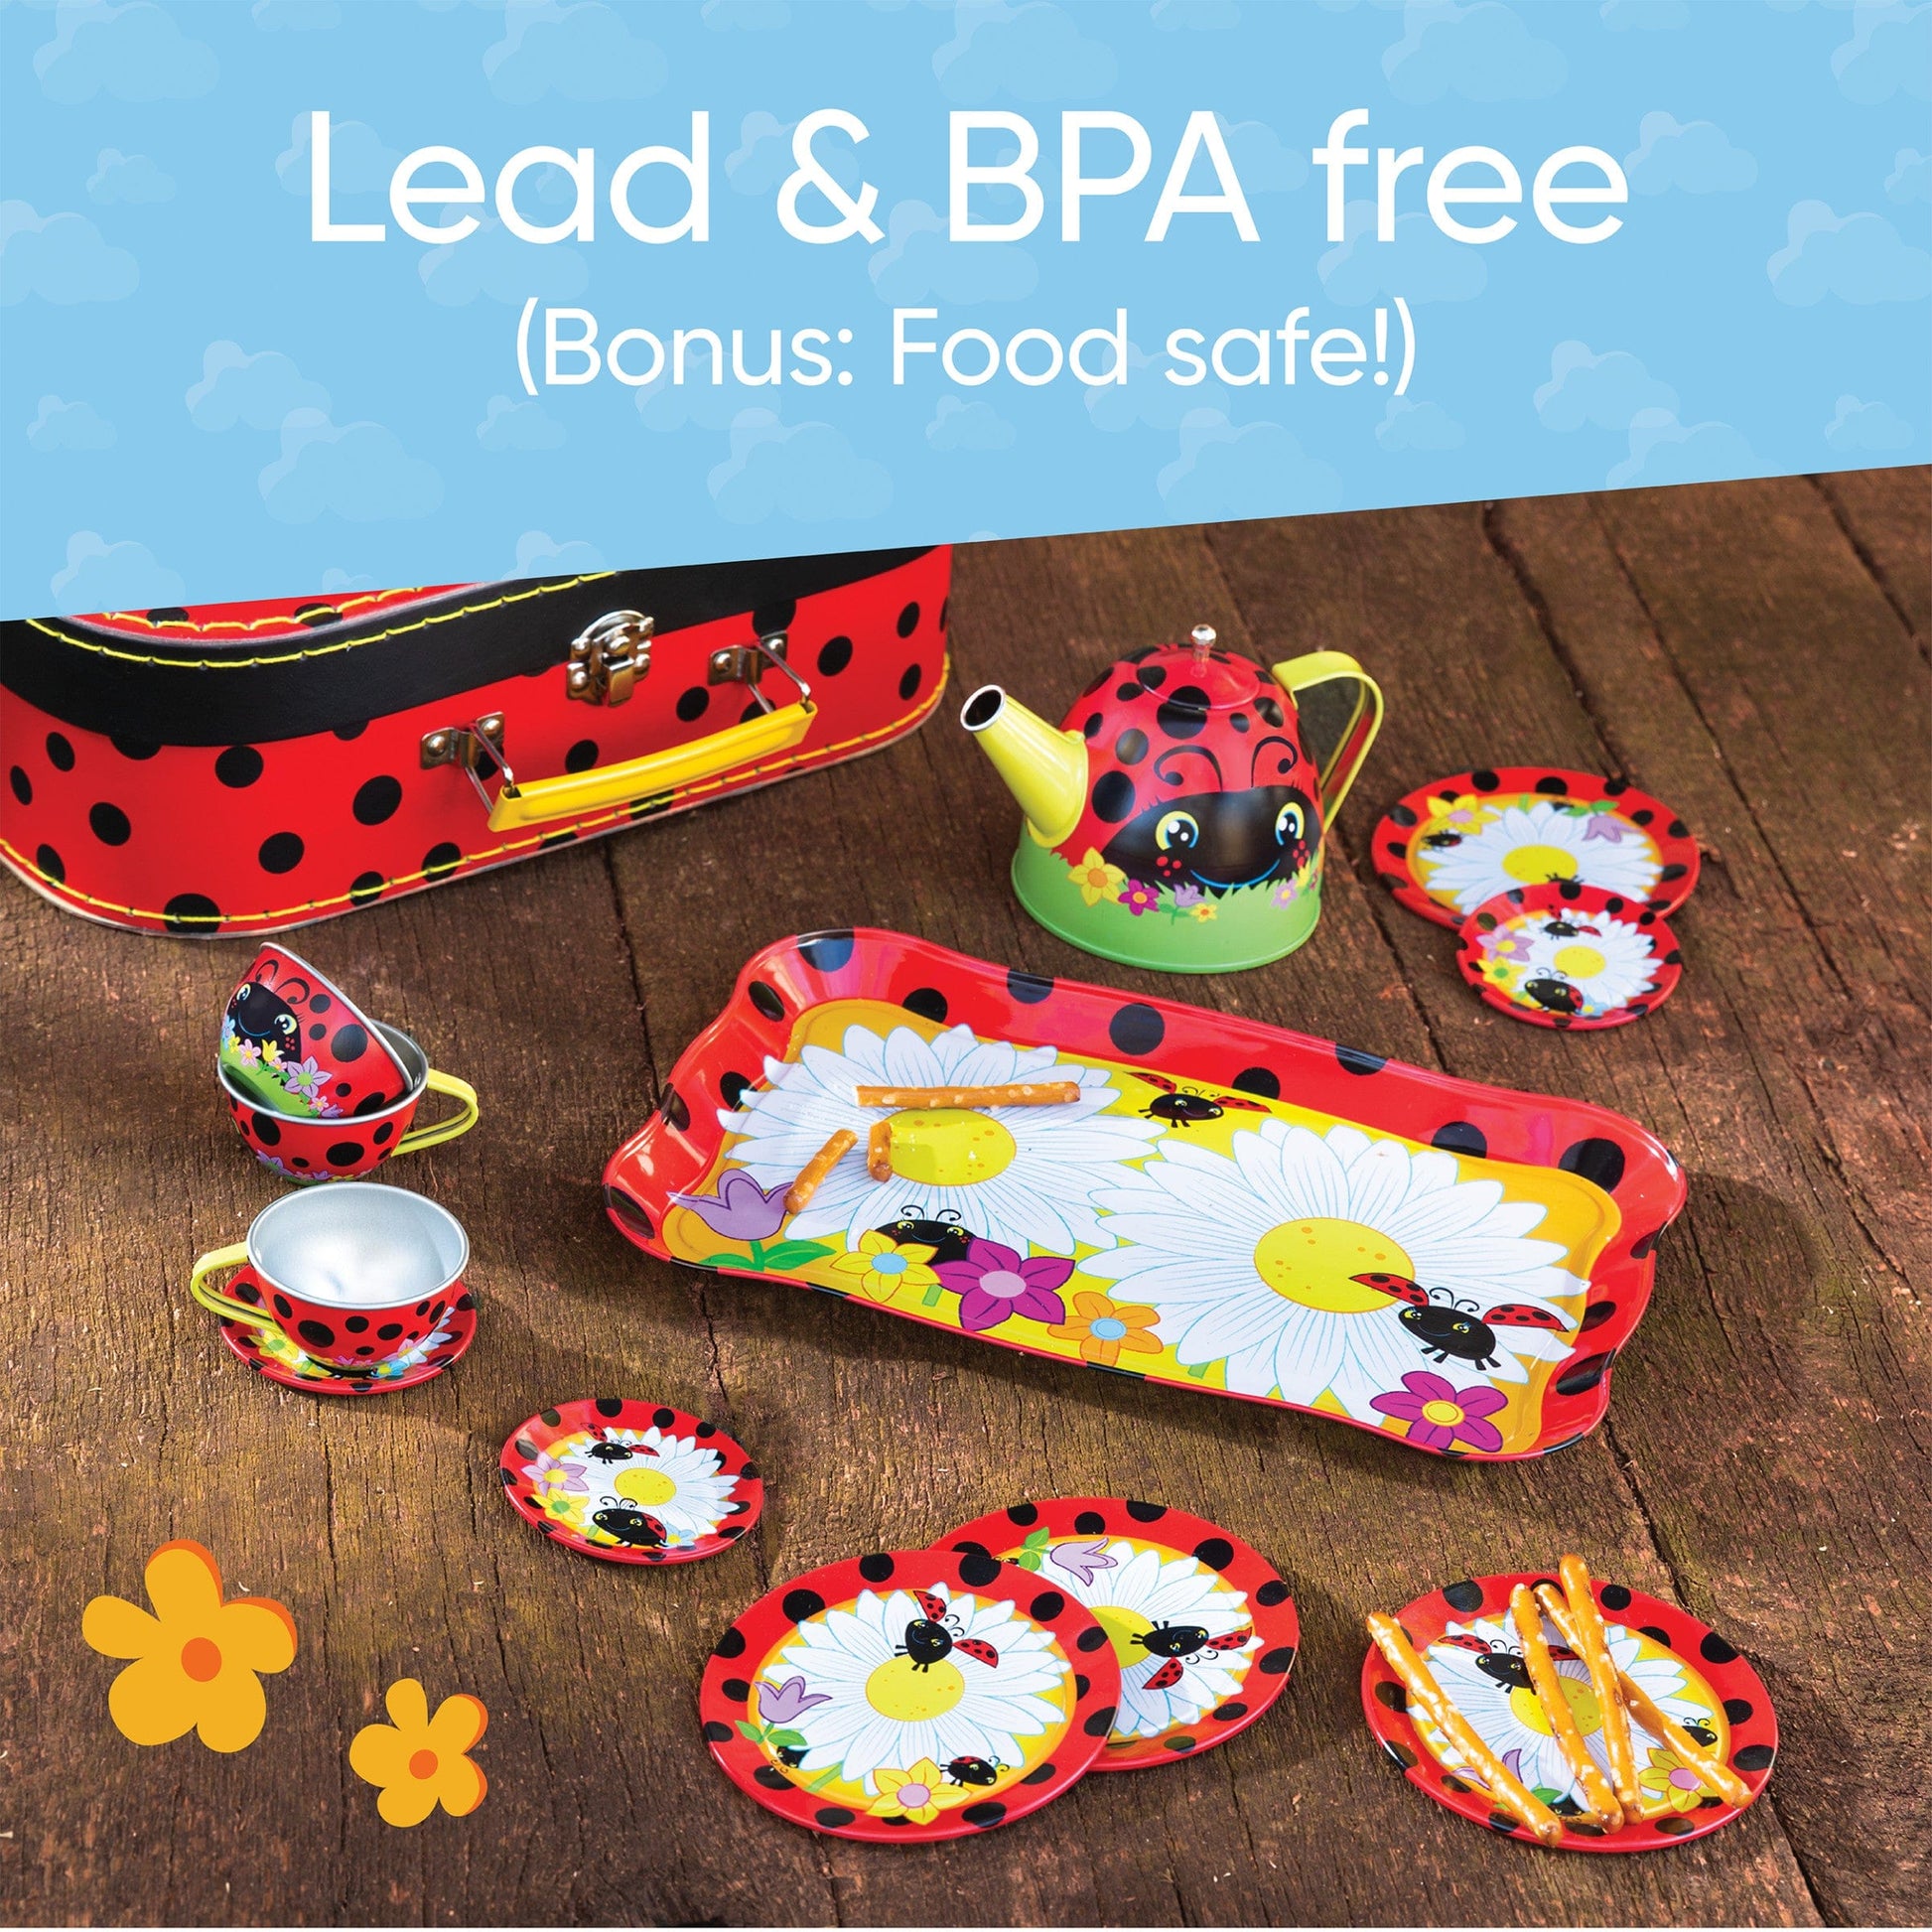 15-Piece Ladybug-Themed Tin Tea Set